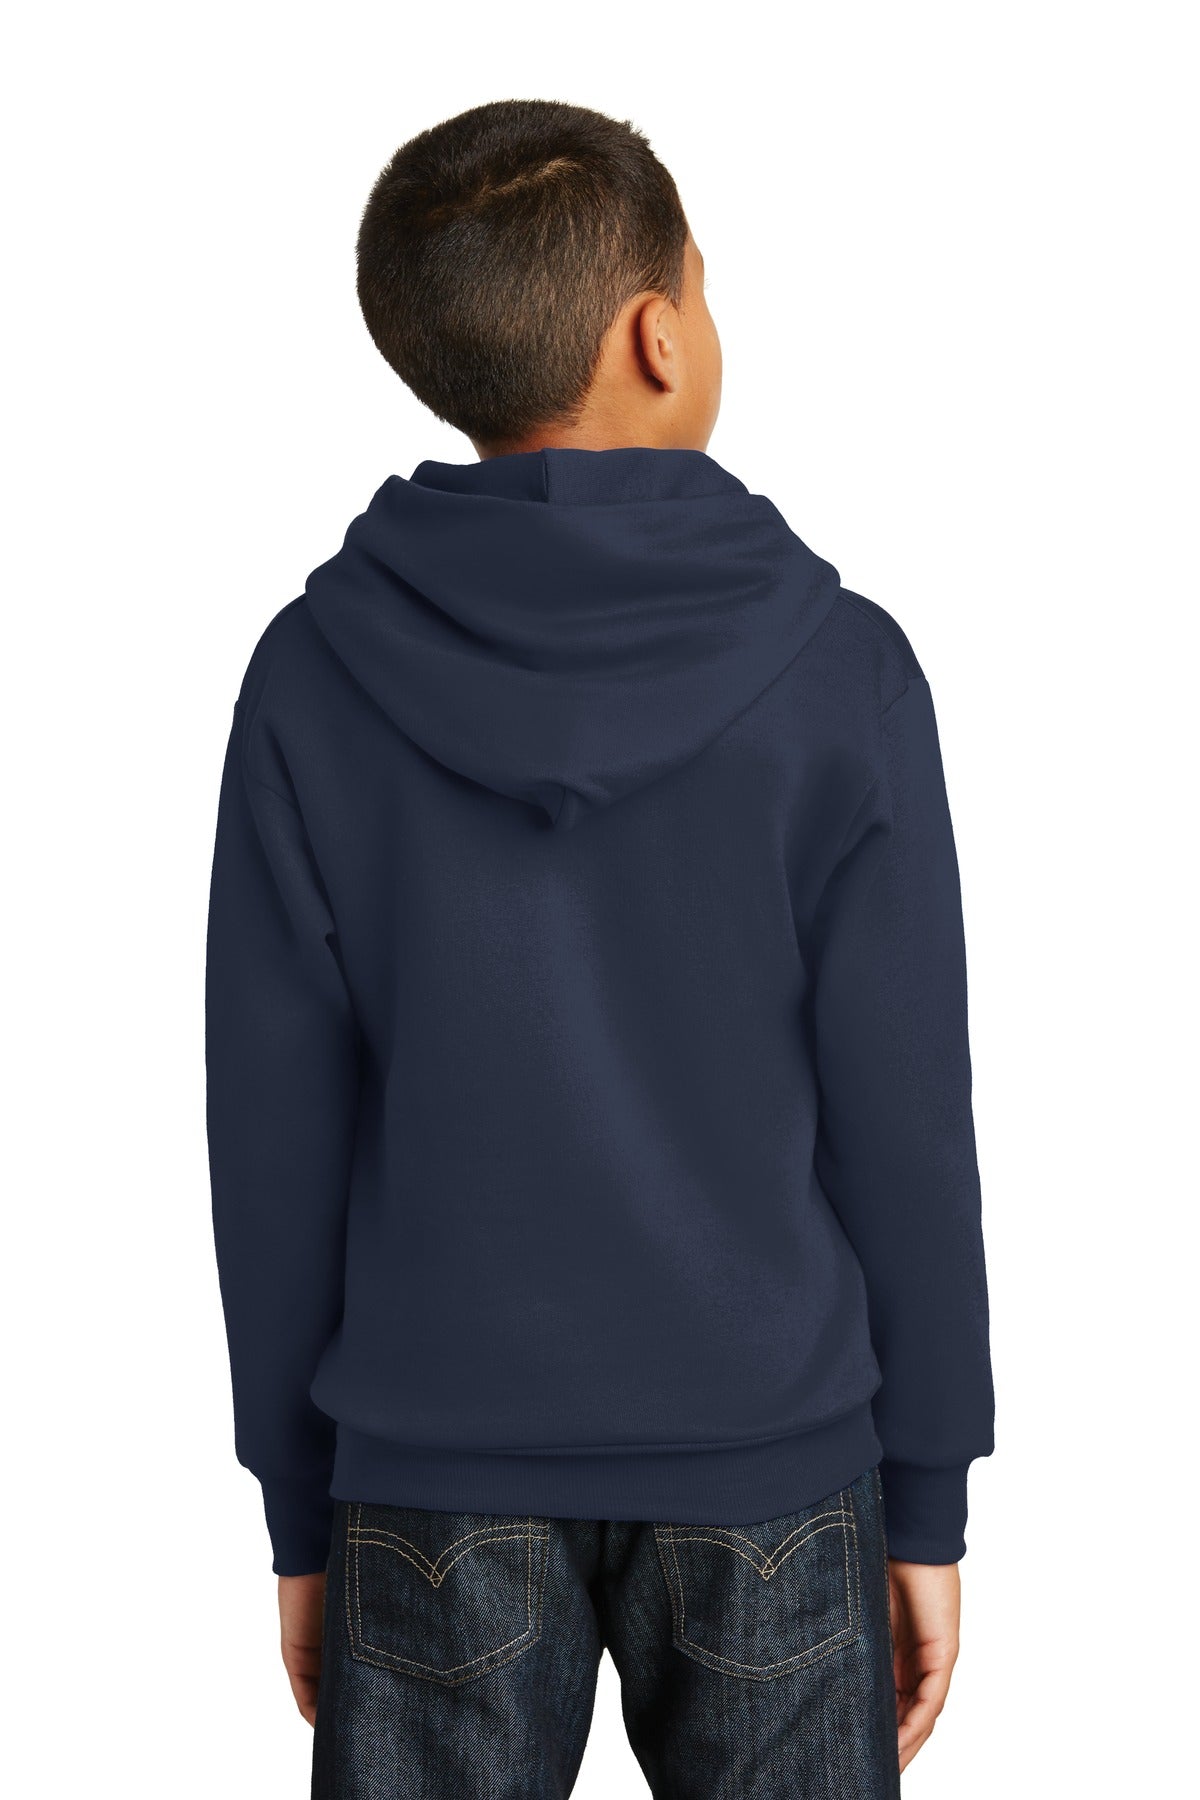 Hanes - Youth EcoSmart Pullover Hooded Sweatshirt. P470